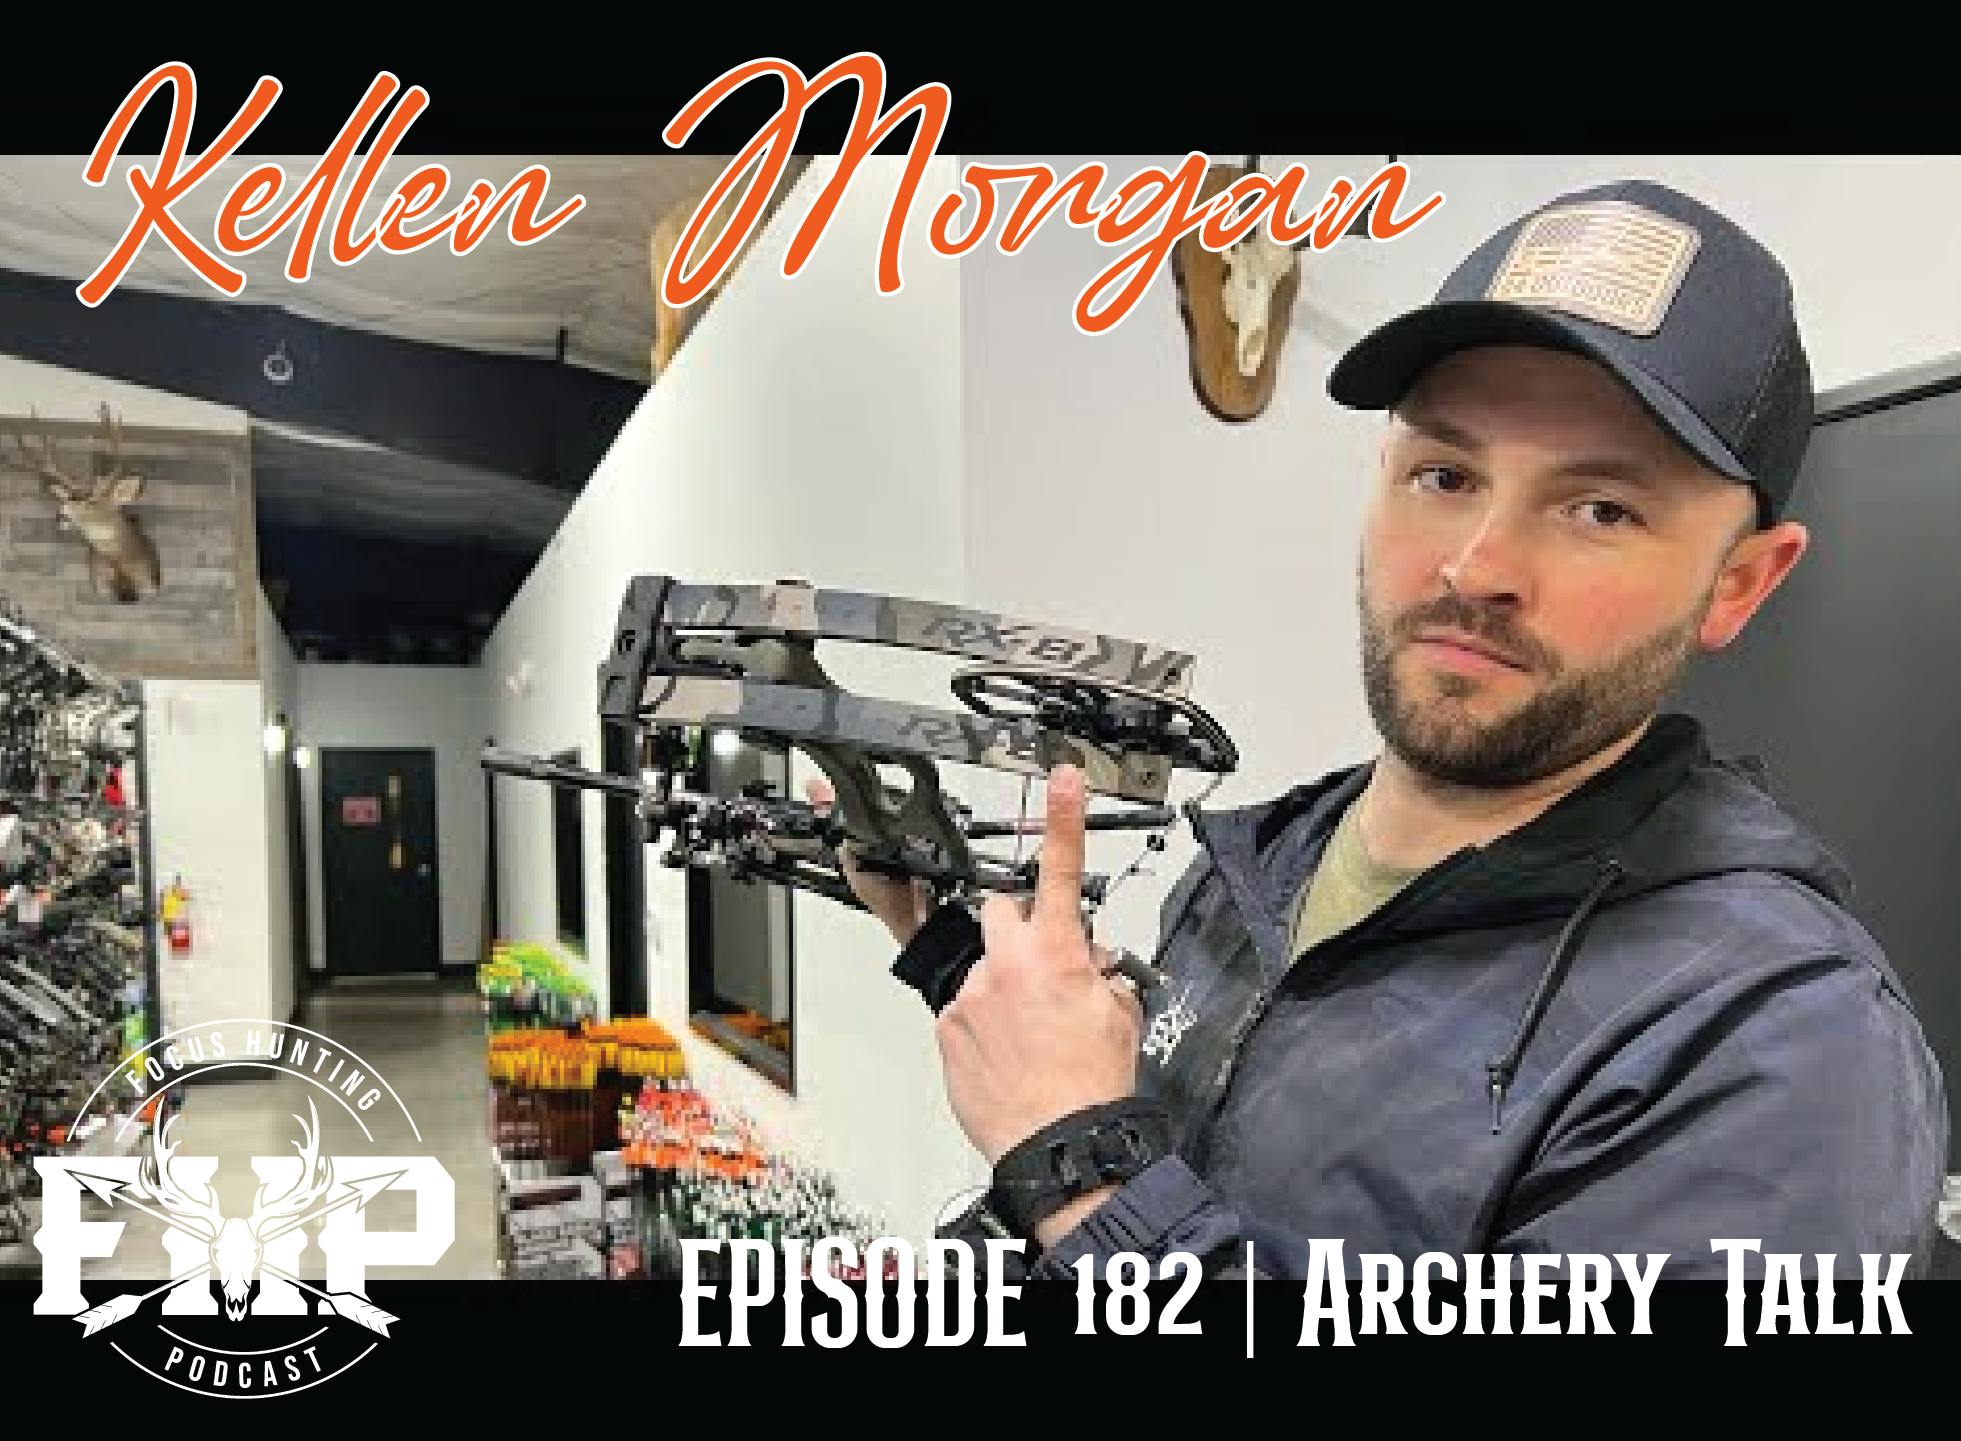 Episode #182 Archery Talk with Kellen Morgan